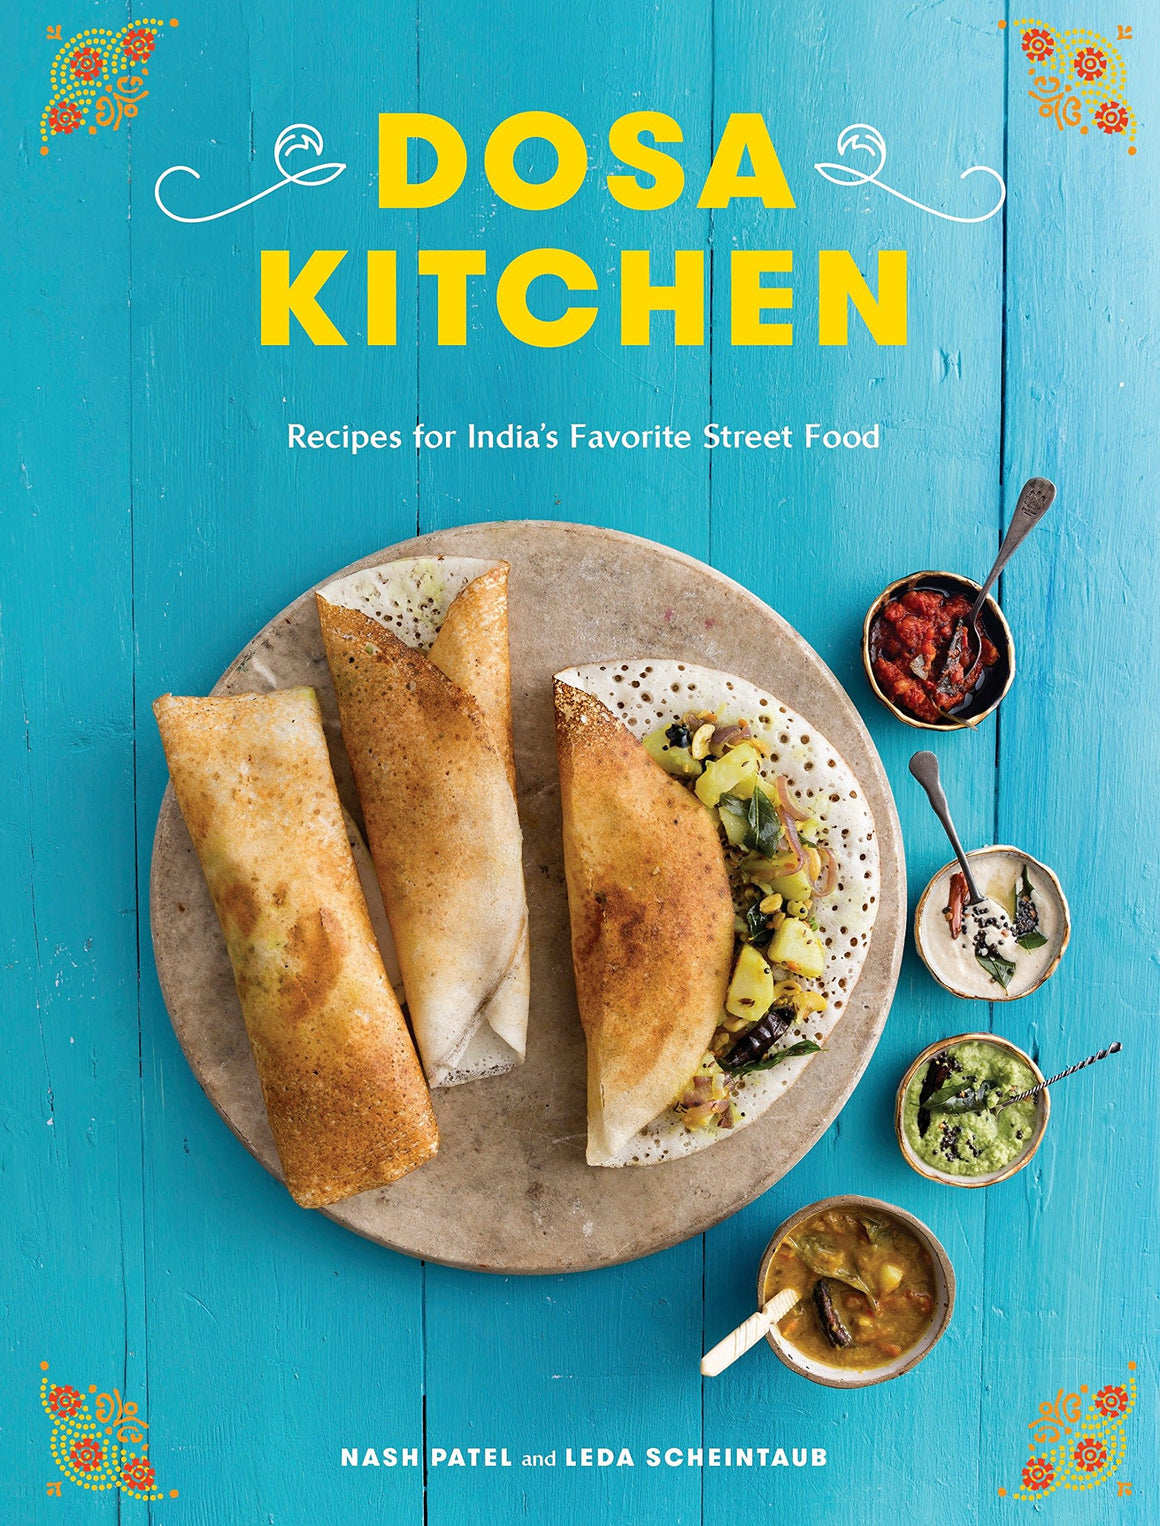 (Indian) Nash Patel & Leda Scheintaub. Dosa Kitchen: Recipes for India's Favorite Street Food: A Cookbook.